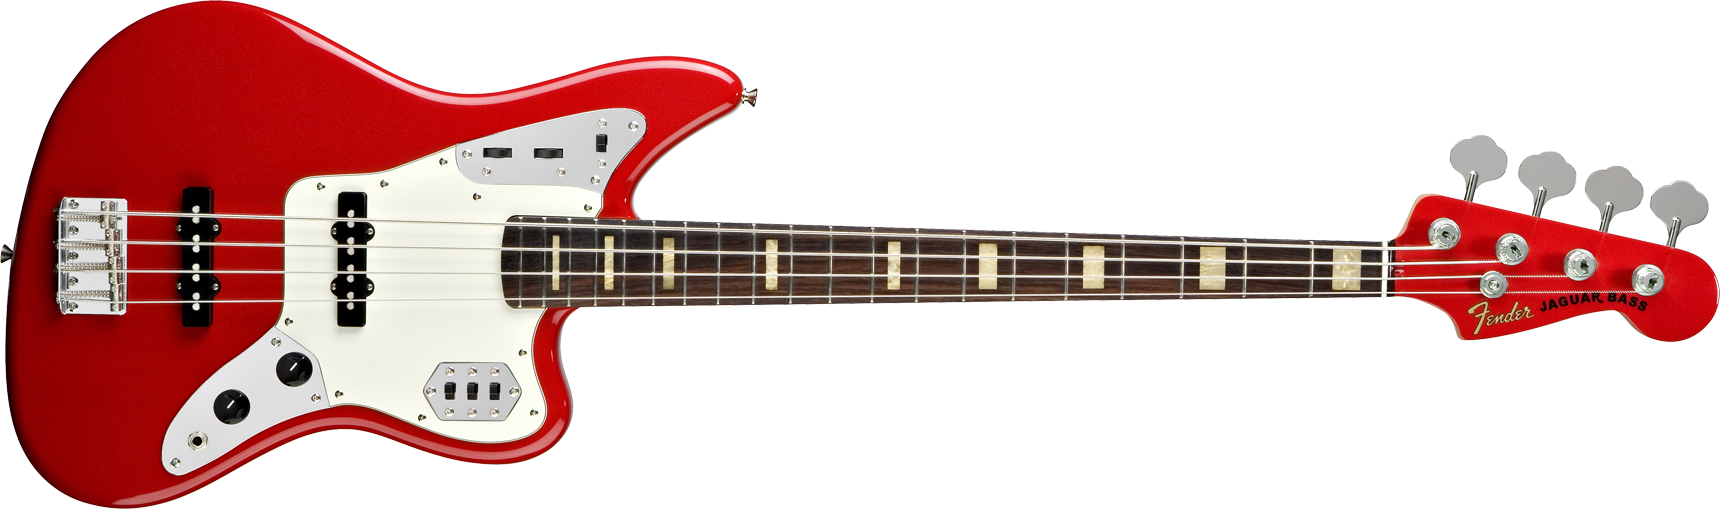 Instrument_Fender_Jaguar Bass Japan